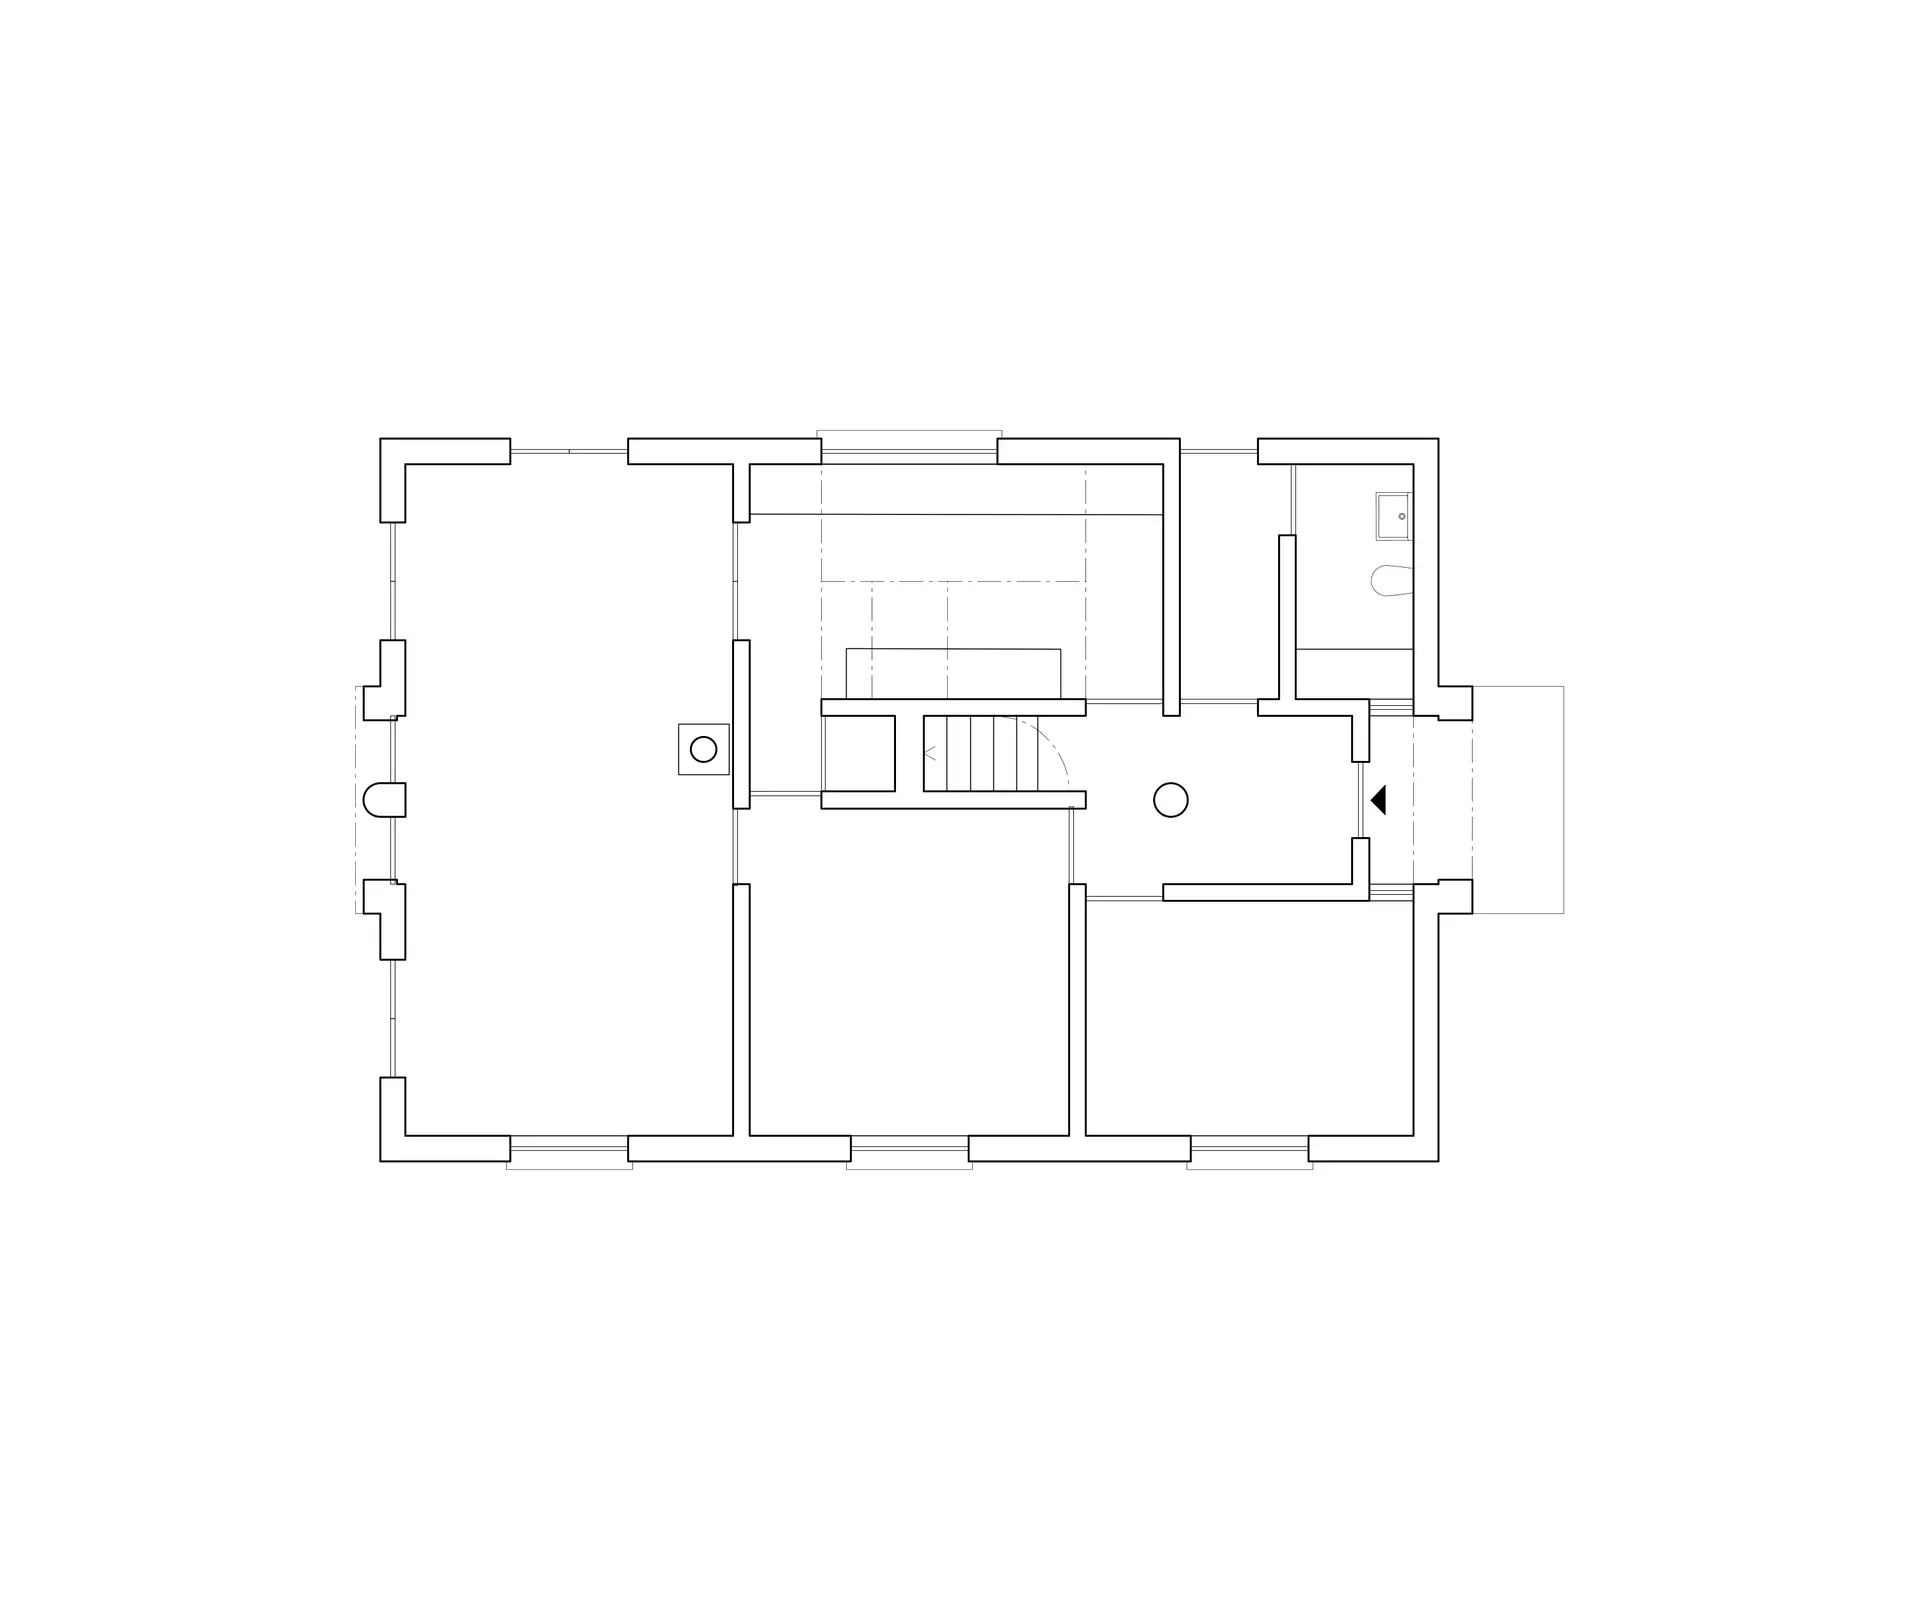 House 1 ground floor plan